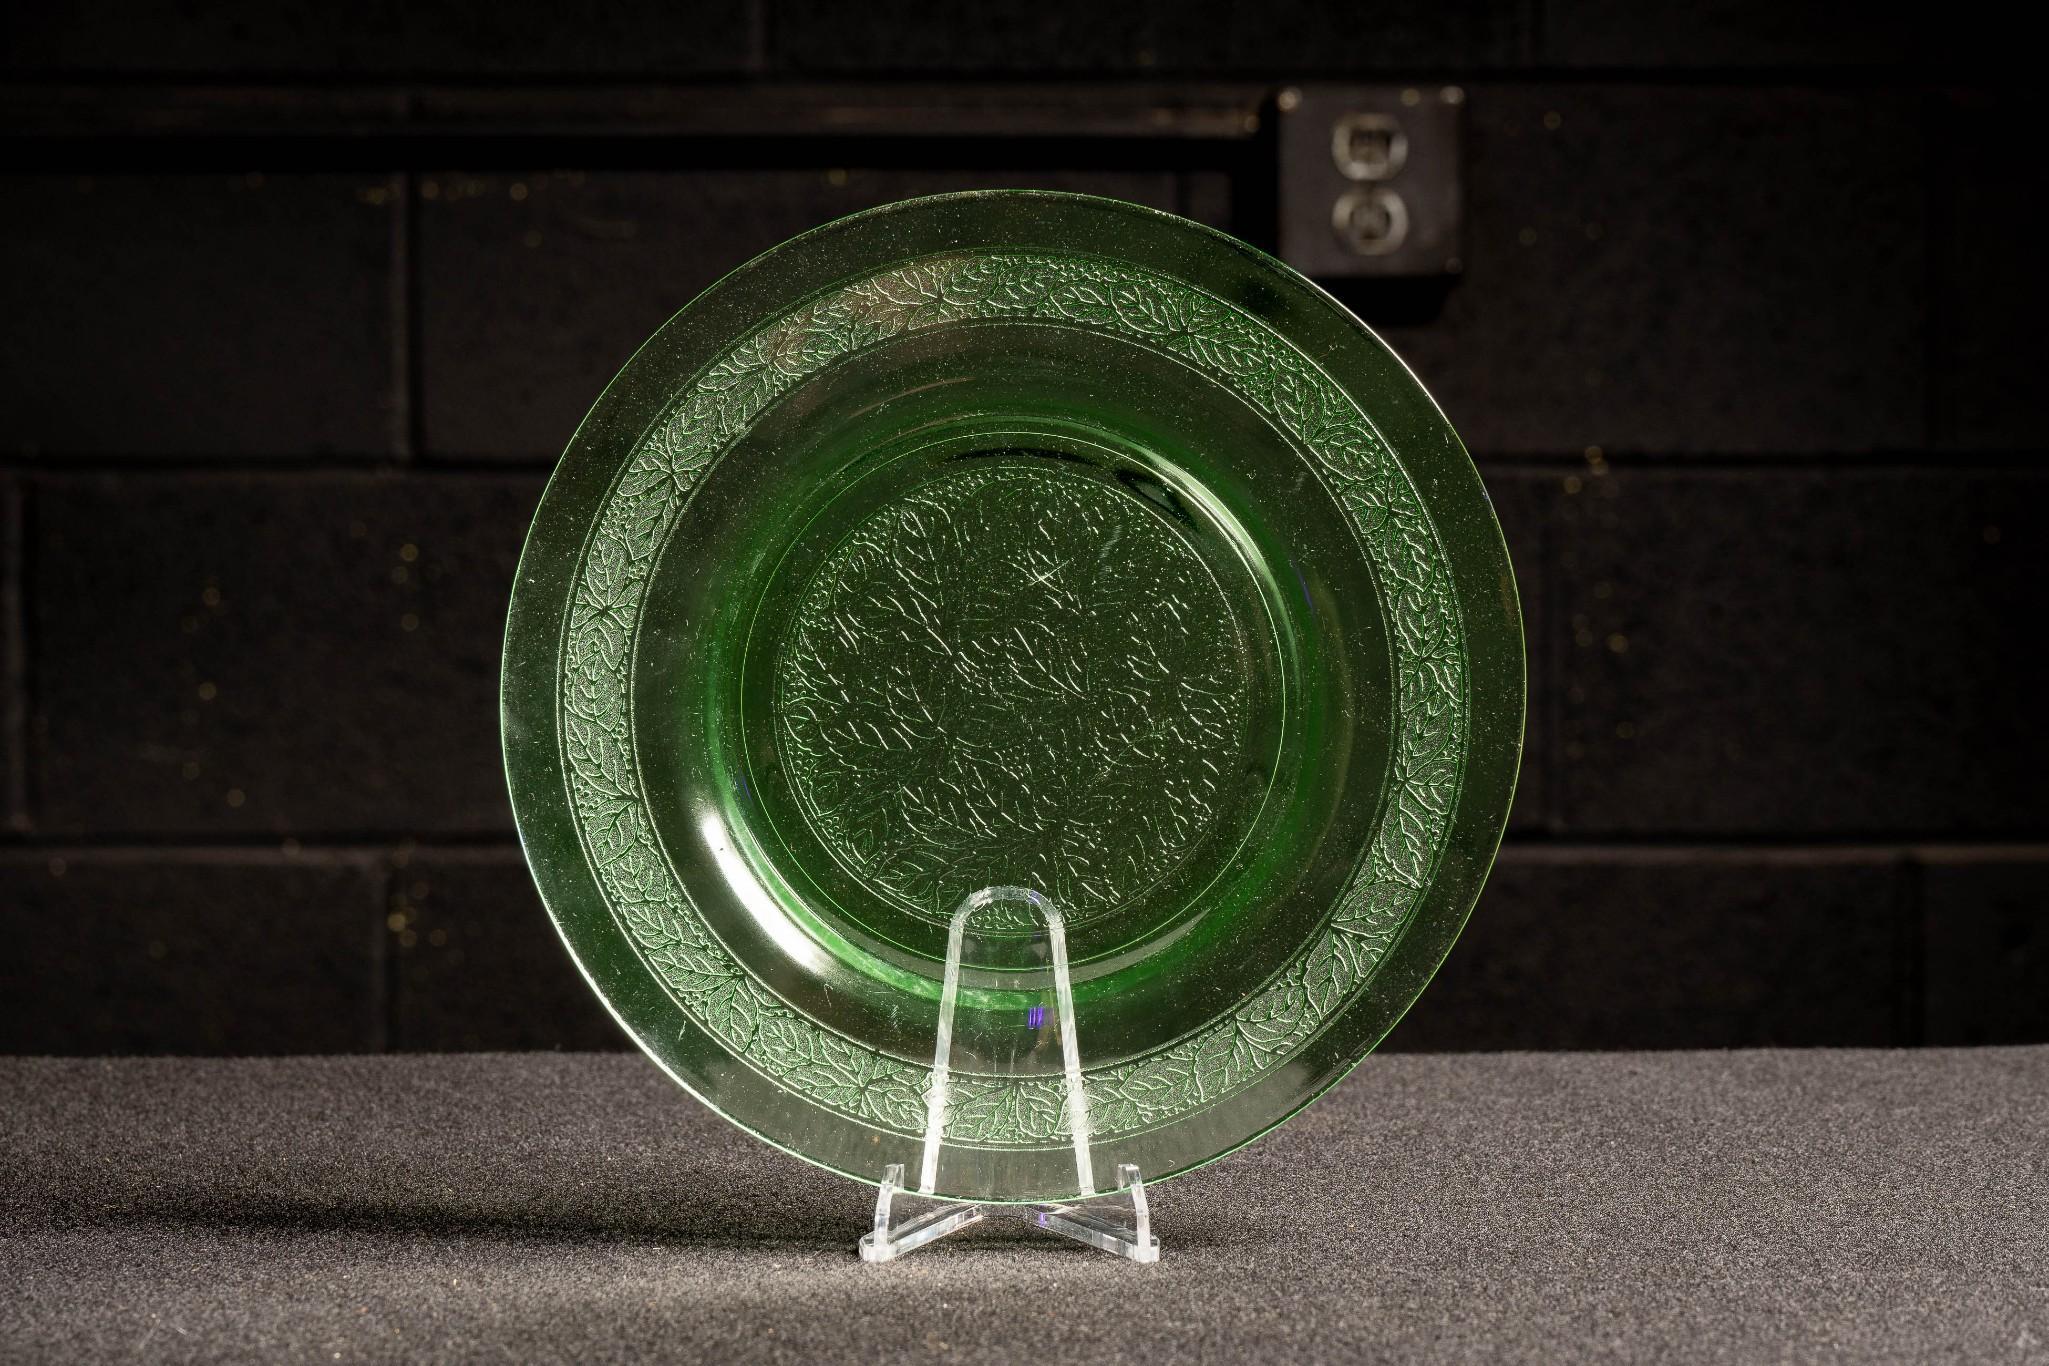 Uranium Glass Floral Plates - Set of 5